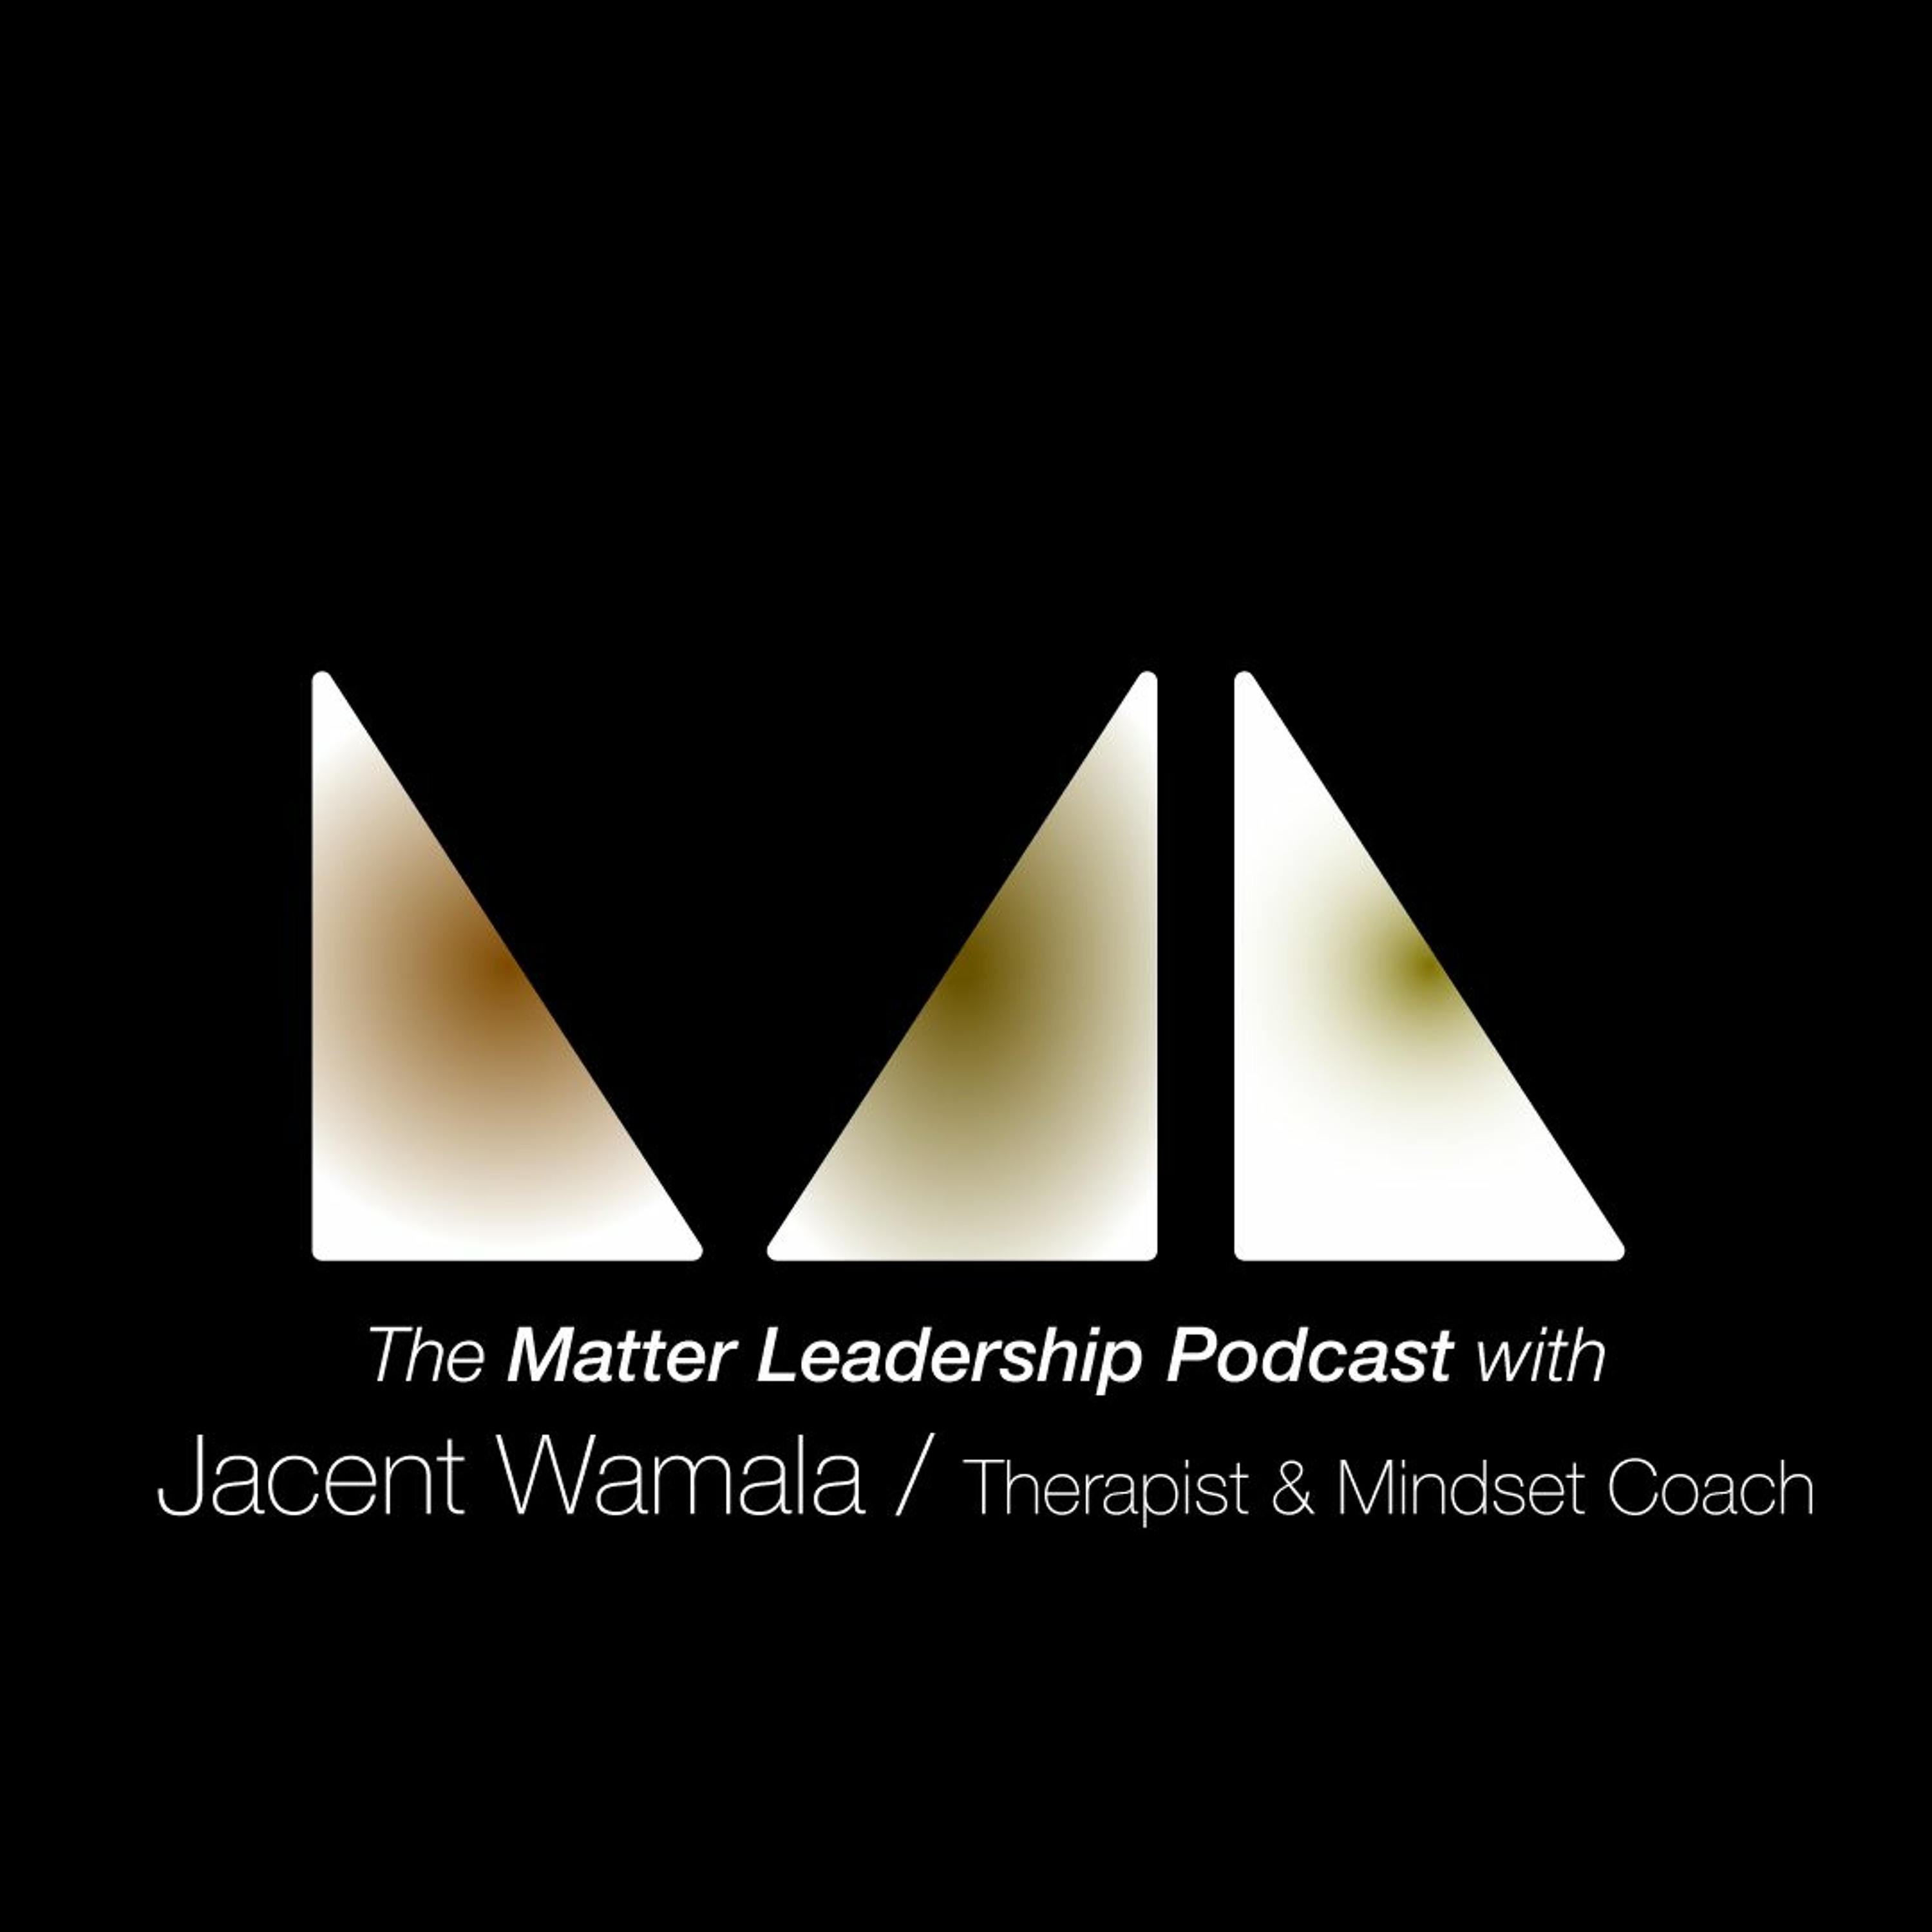 The Matter Leadership Podcast: Jacent Wamala / Therapist & Mindset Coach